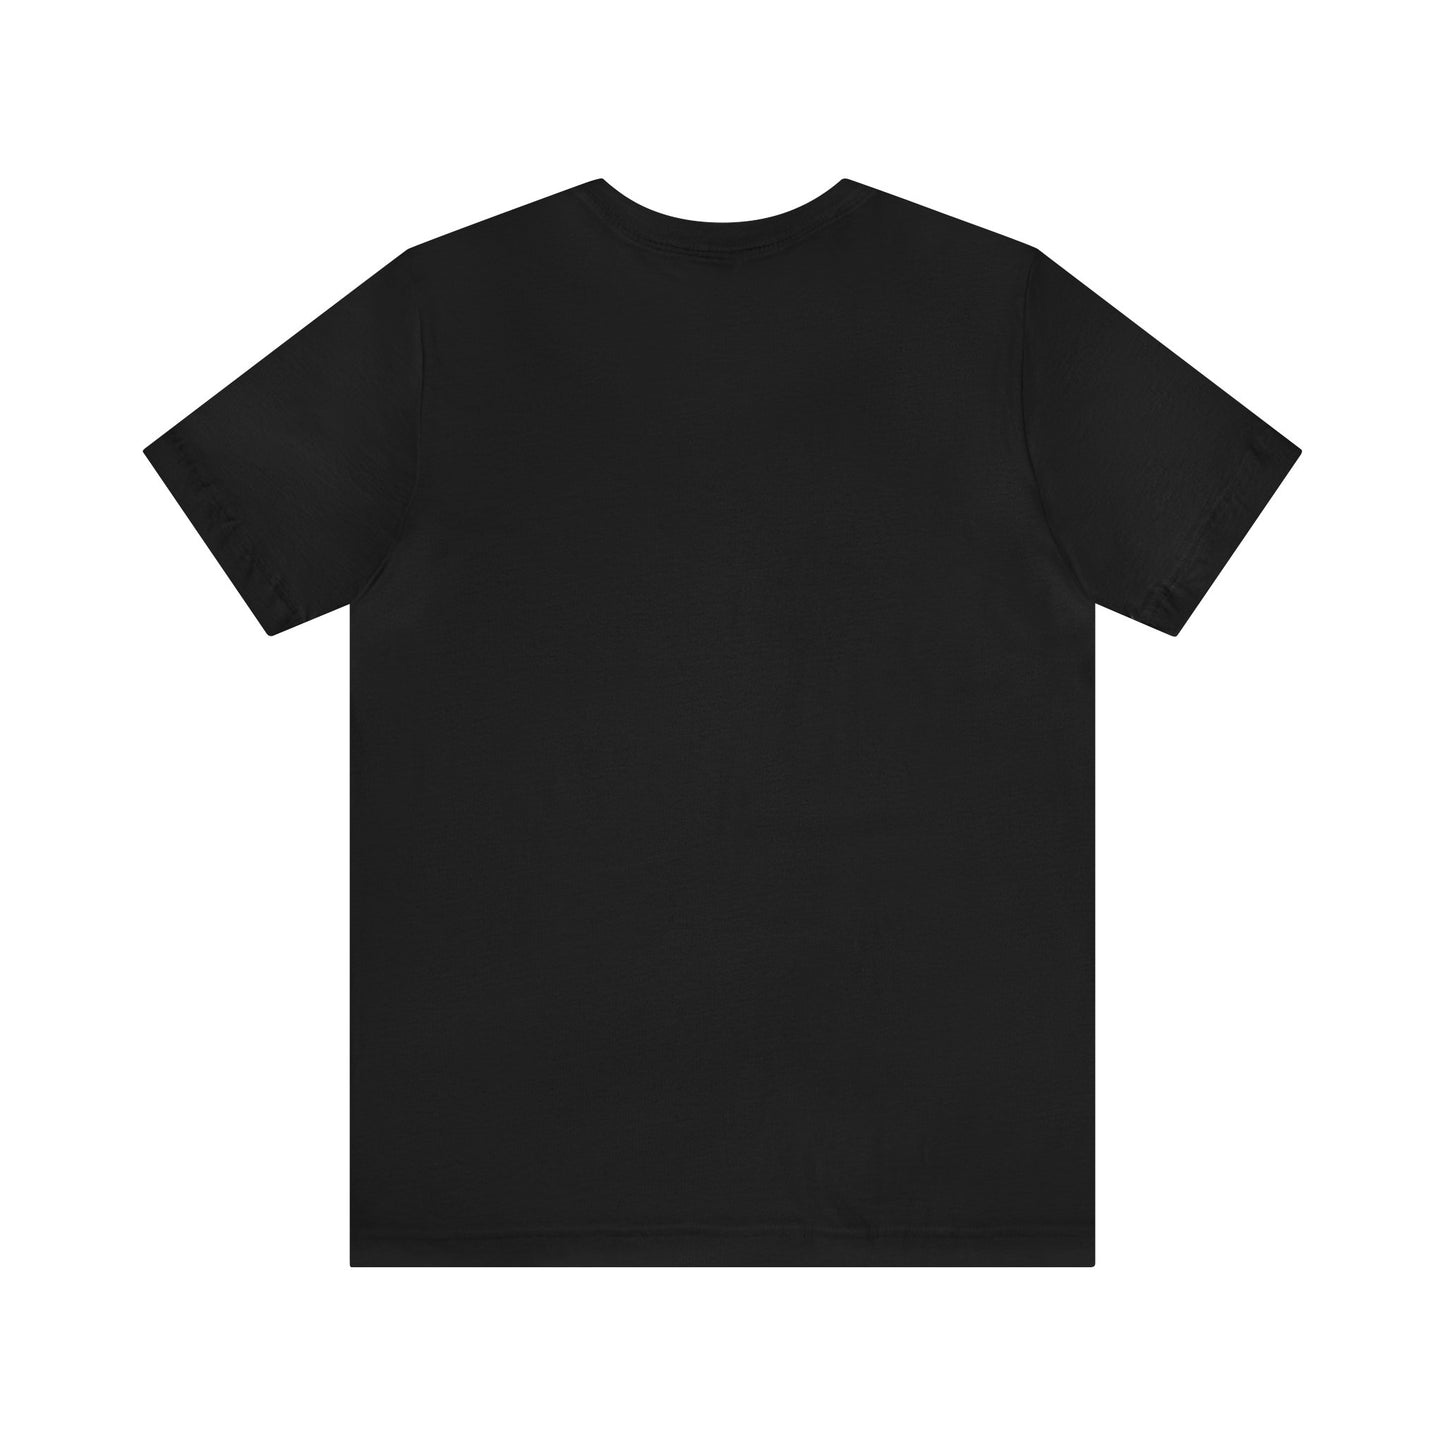 Sam Garcia Graphic Shirt (Cotton)